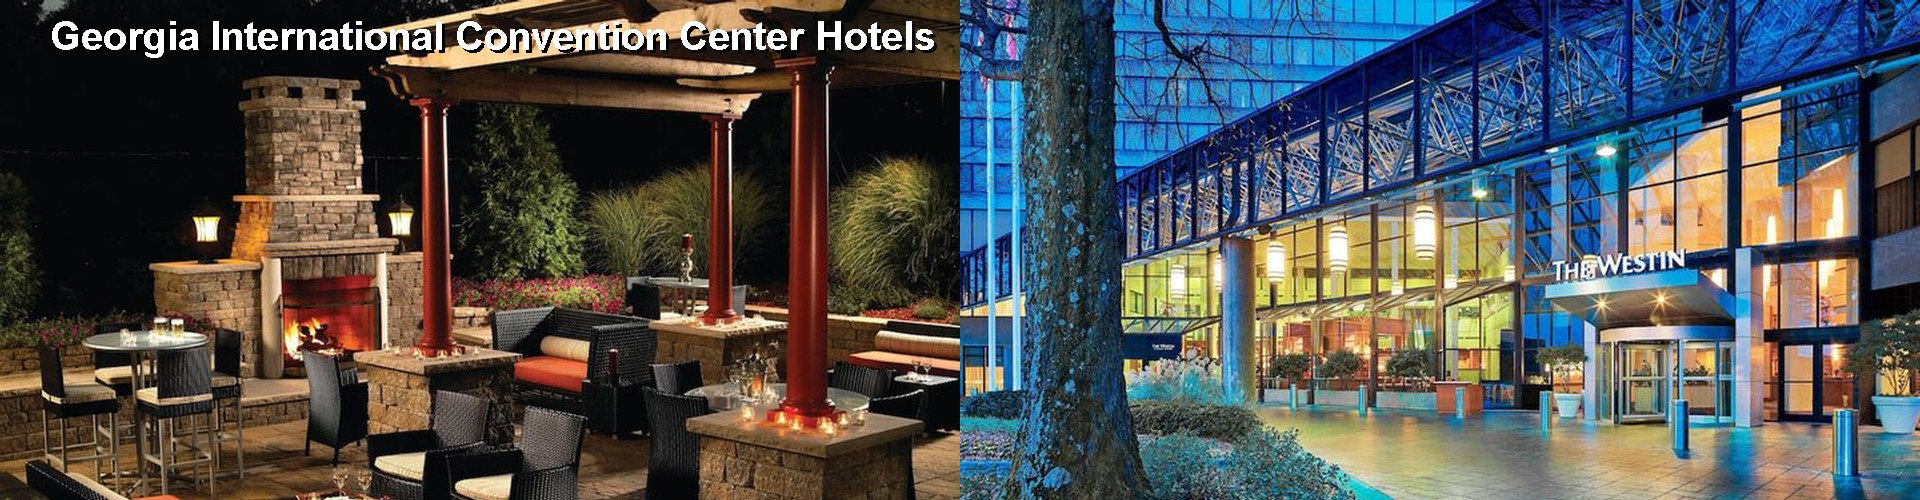 4 Best Hotels near Georgia International Convention Center